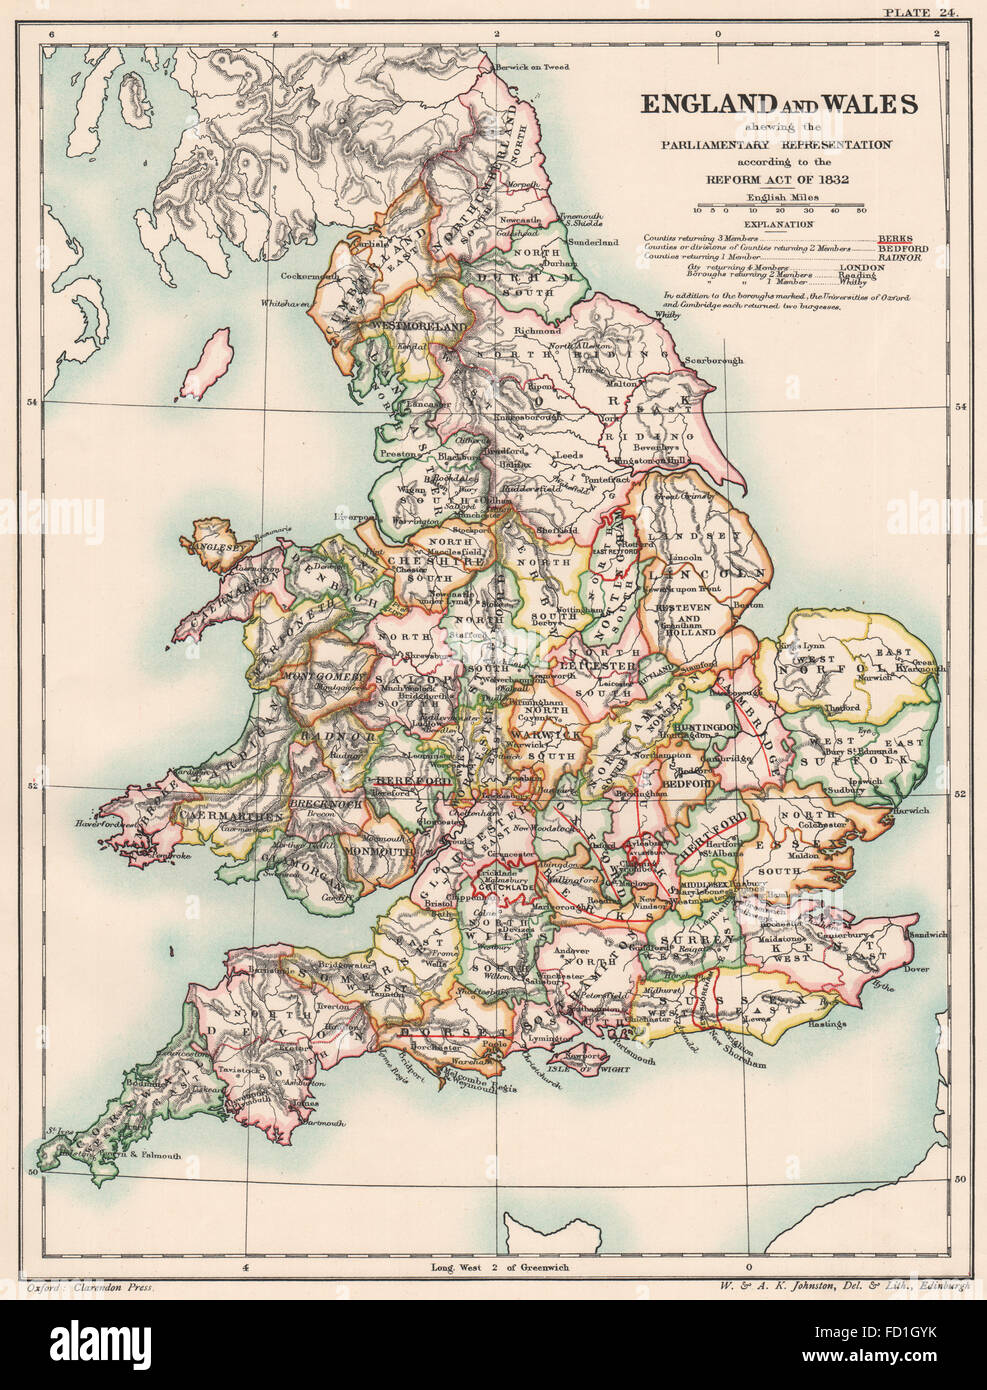 england-wales-1832-parliamentary-representation-on-reform-act-bill-FD1GYK.jpg